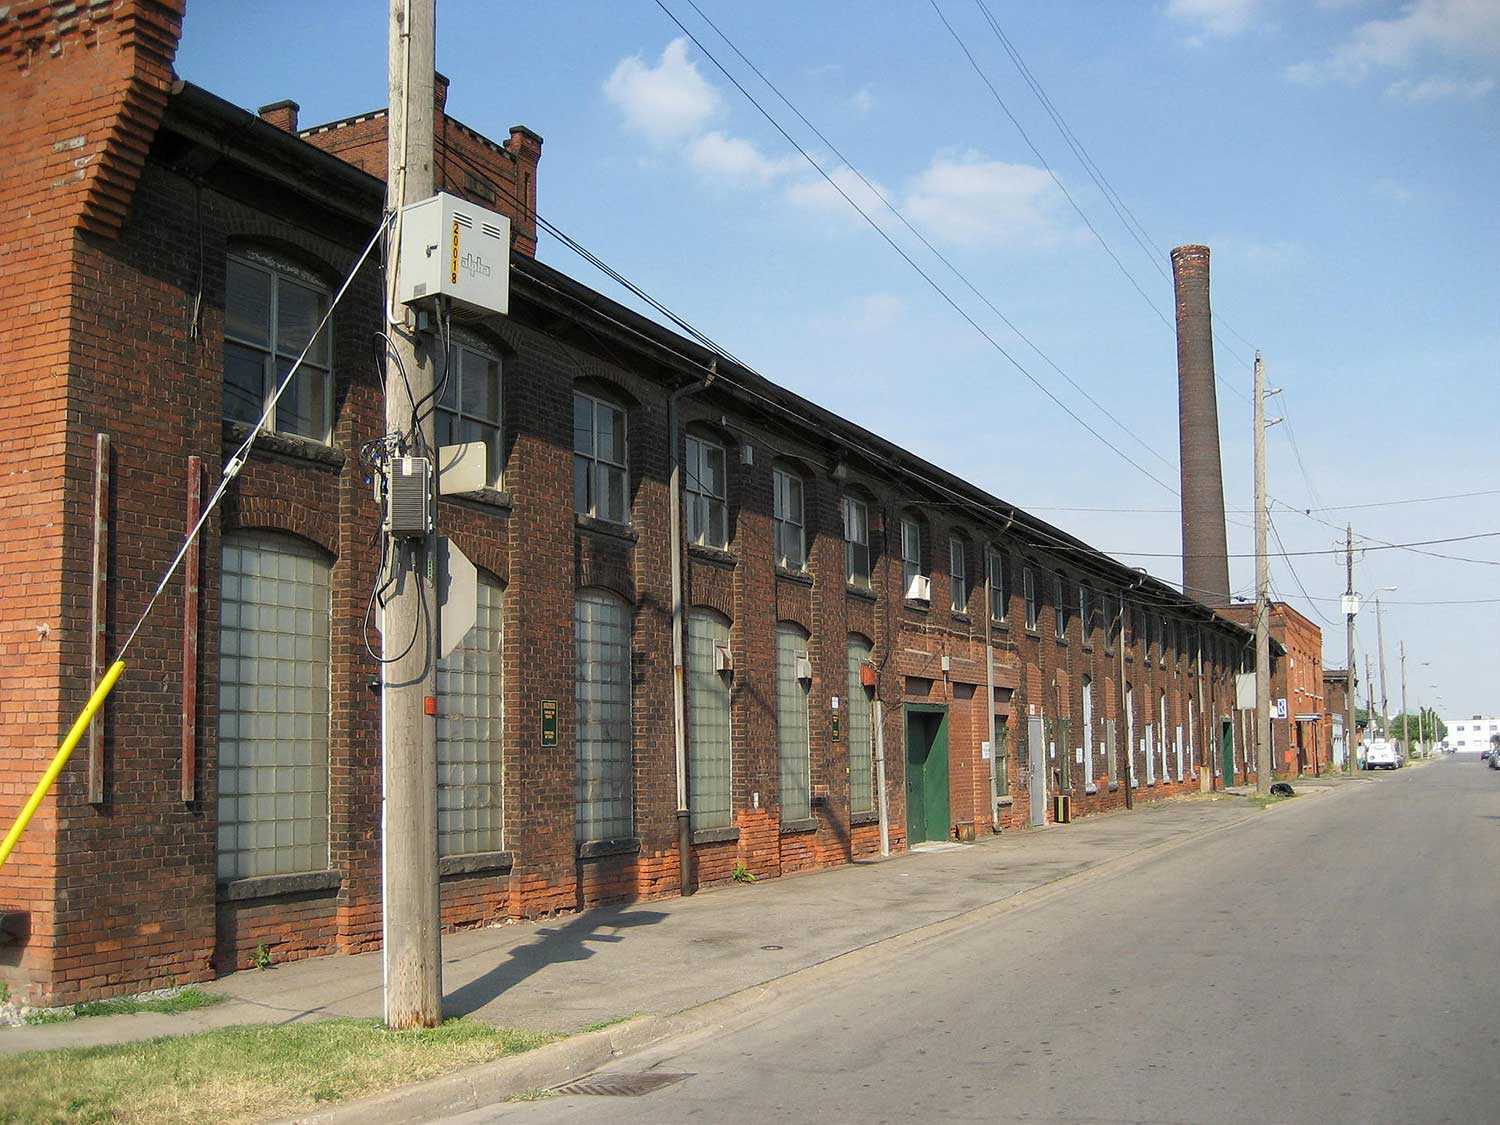 The Cotton Factory (Photo courtesy of Doors Open Hamilton)